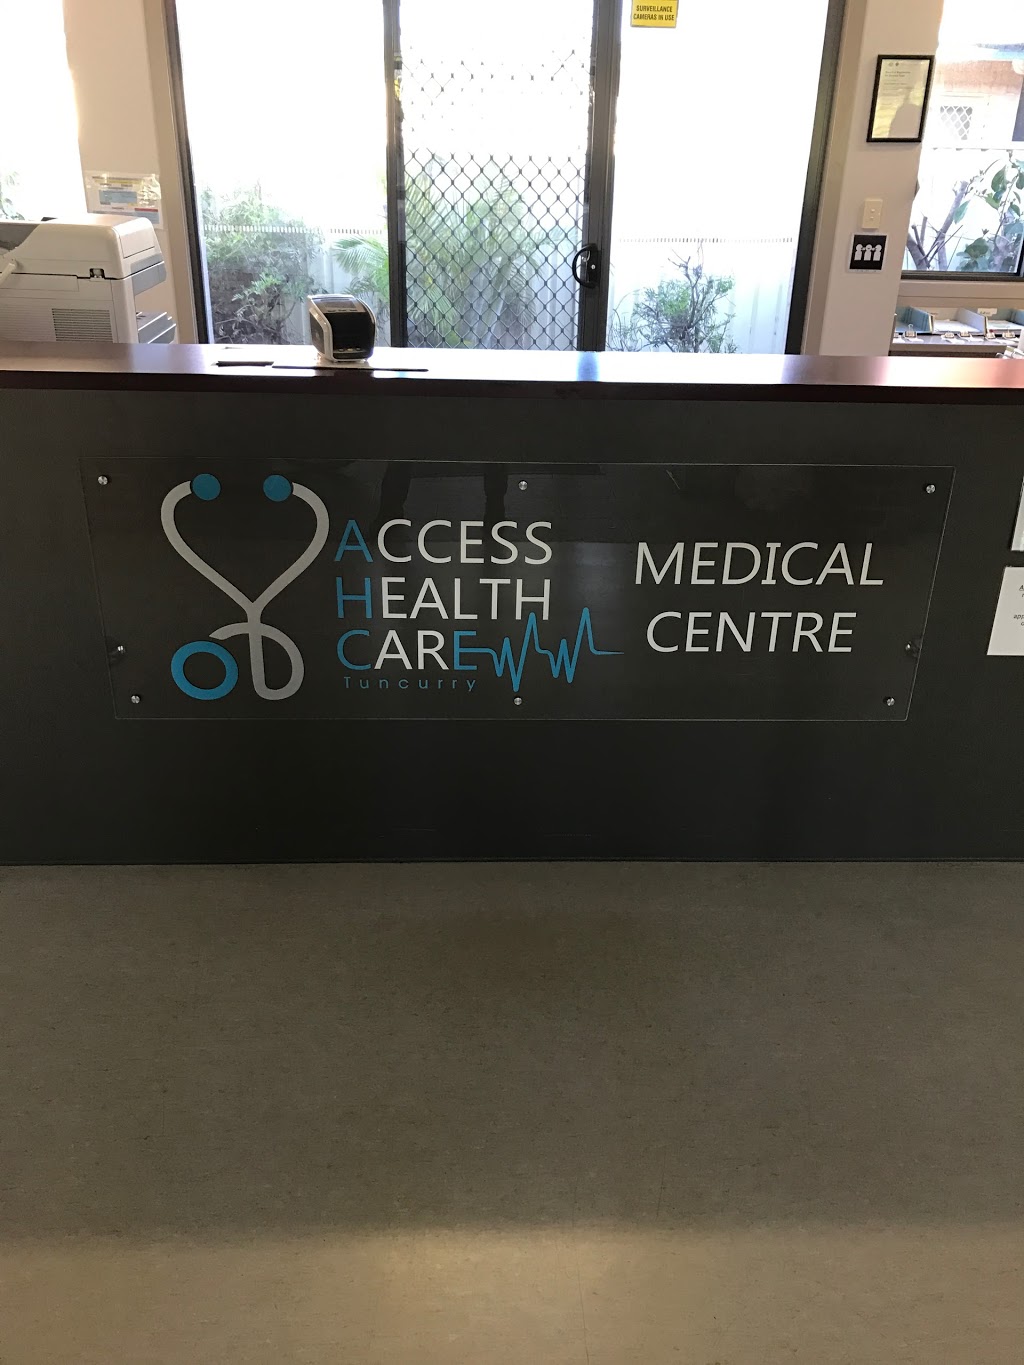 Access Health Care - Tuncurry | doctor | 18 Peel St, Tuncurry NSW 2428, Australia | 0265555464 OR +61 2 6555 5464